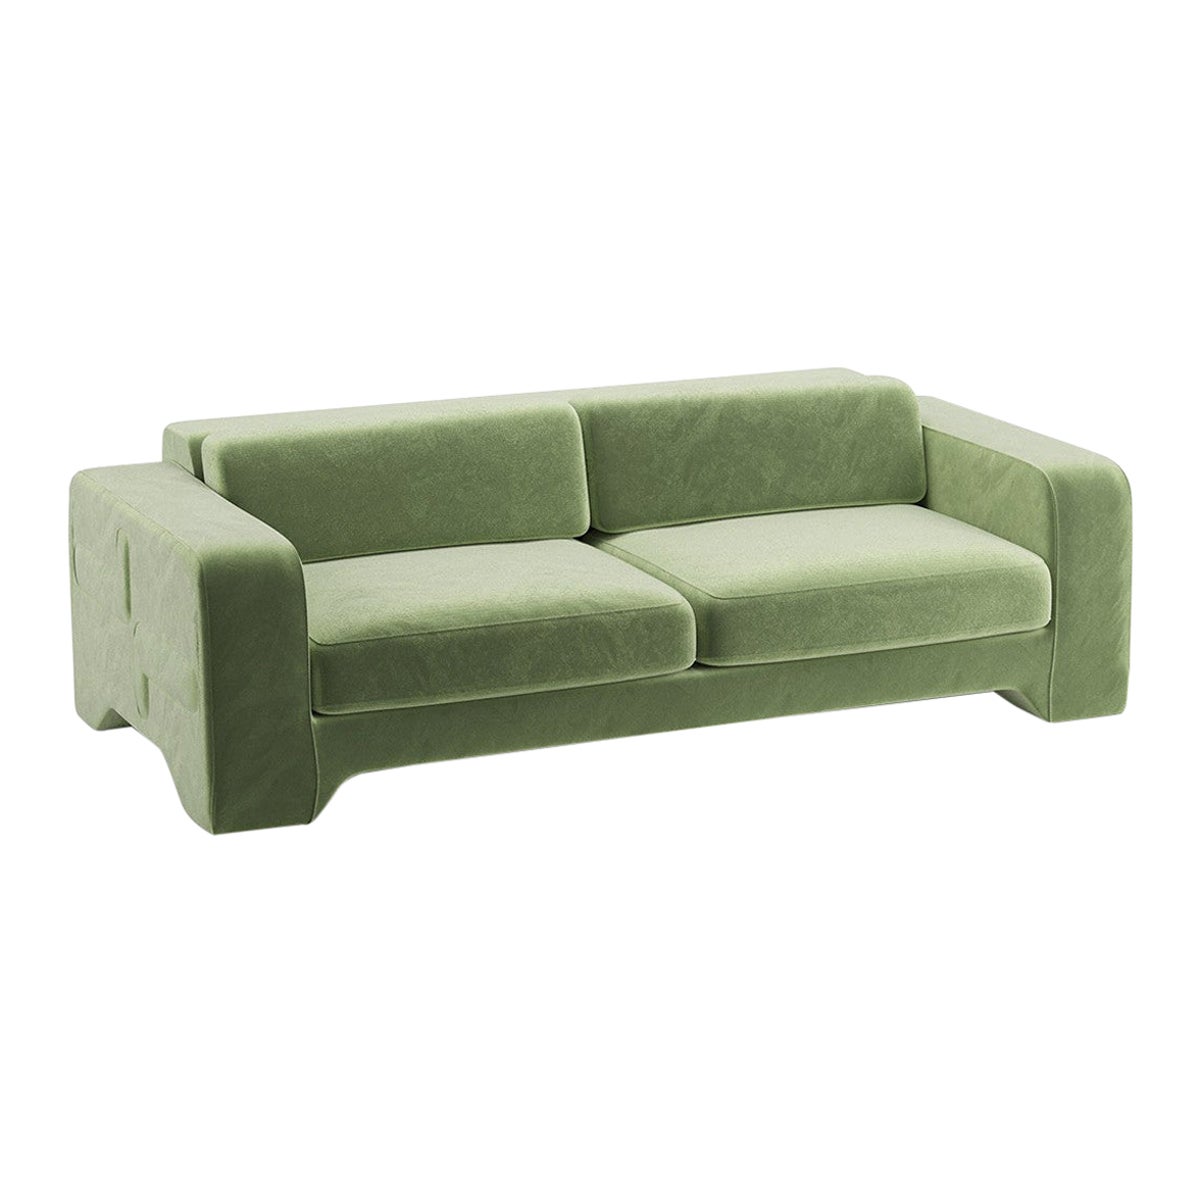 Popus Editions Giovanna 2.5 Seater Sofa in Green Verone Velvet Upholstery